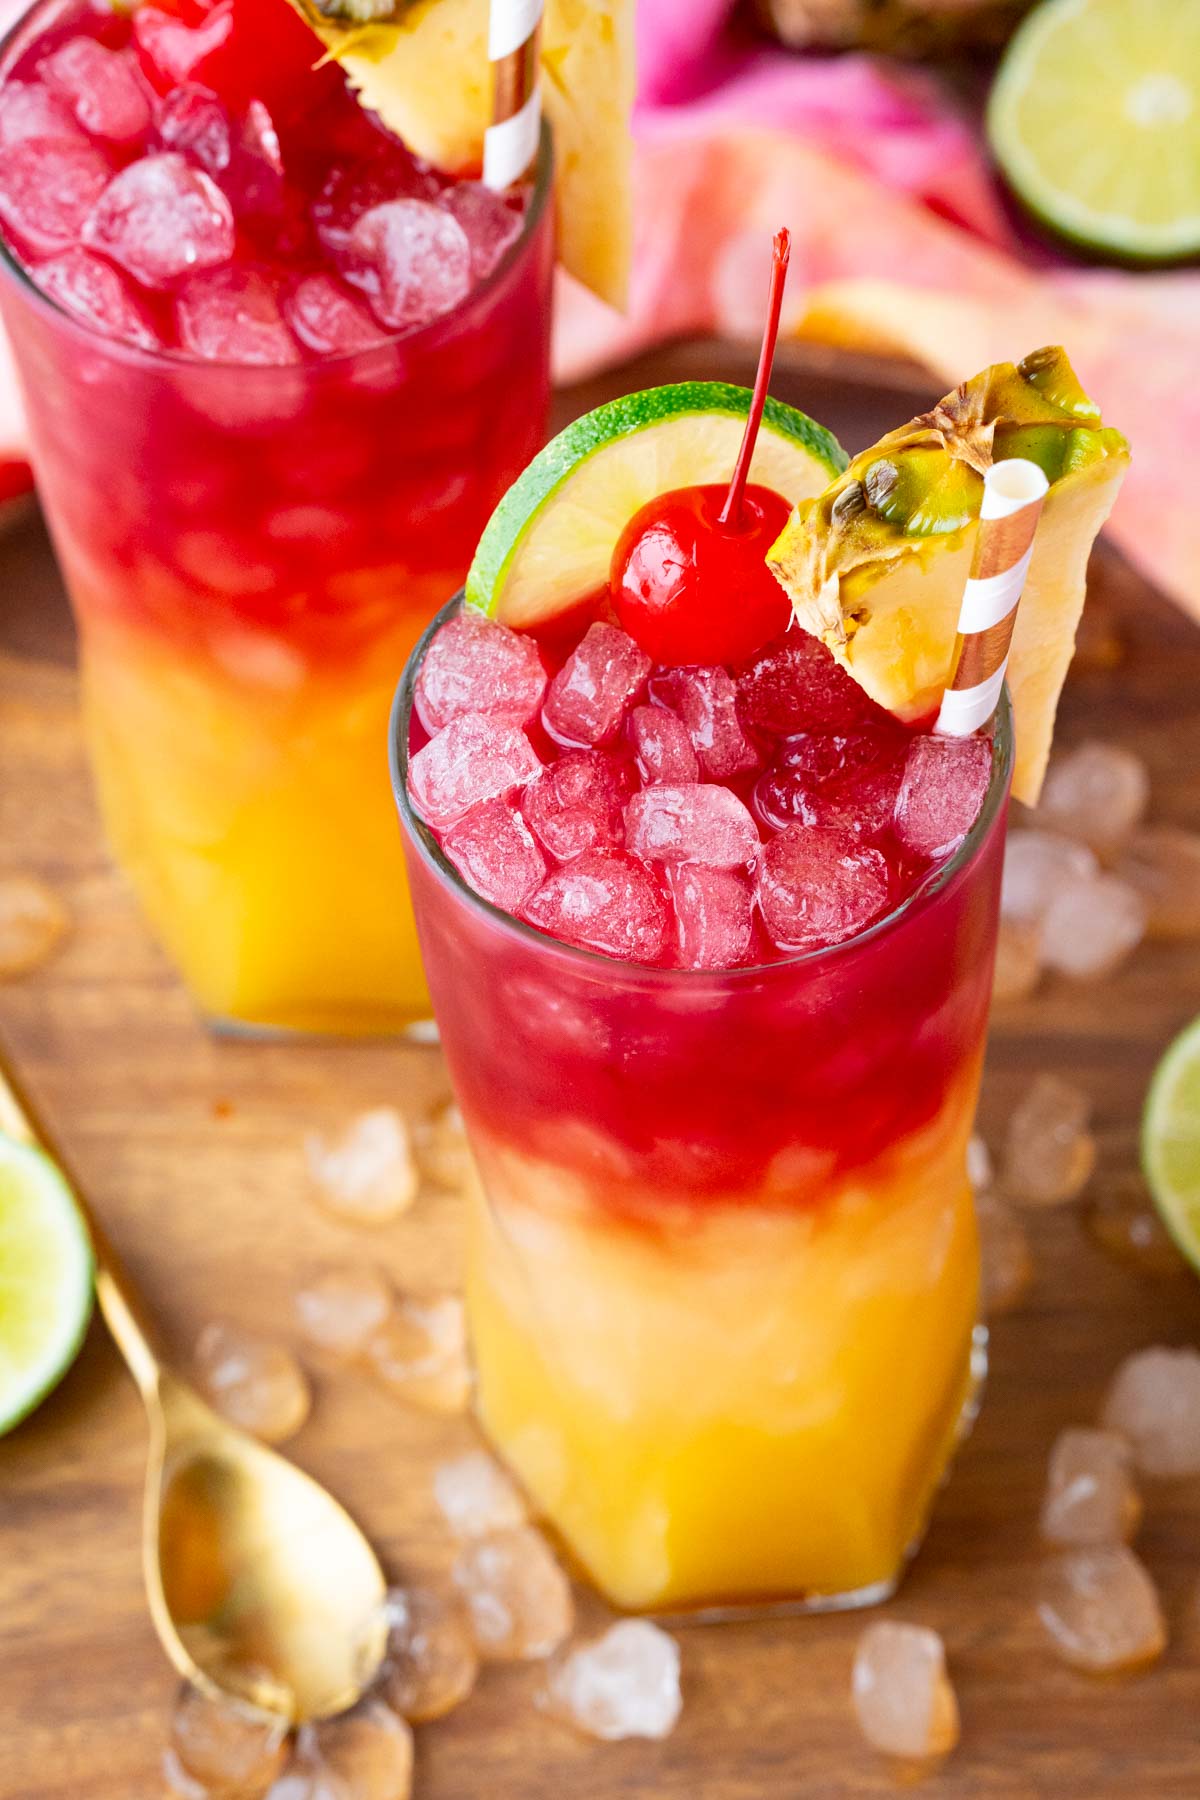 coconut rum pineapple juice and cranberry juice